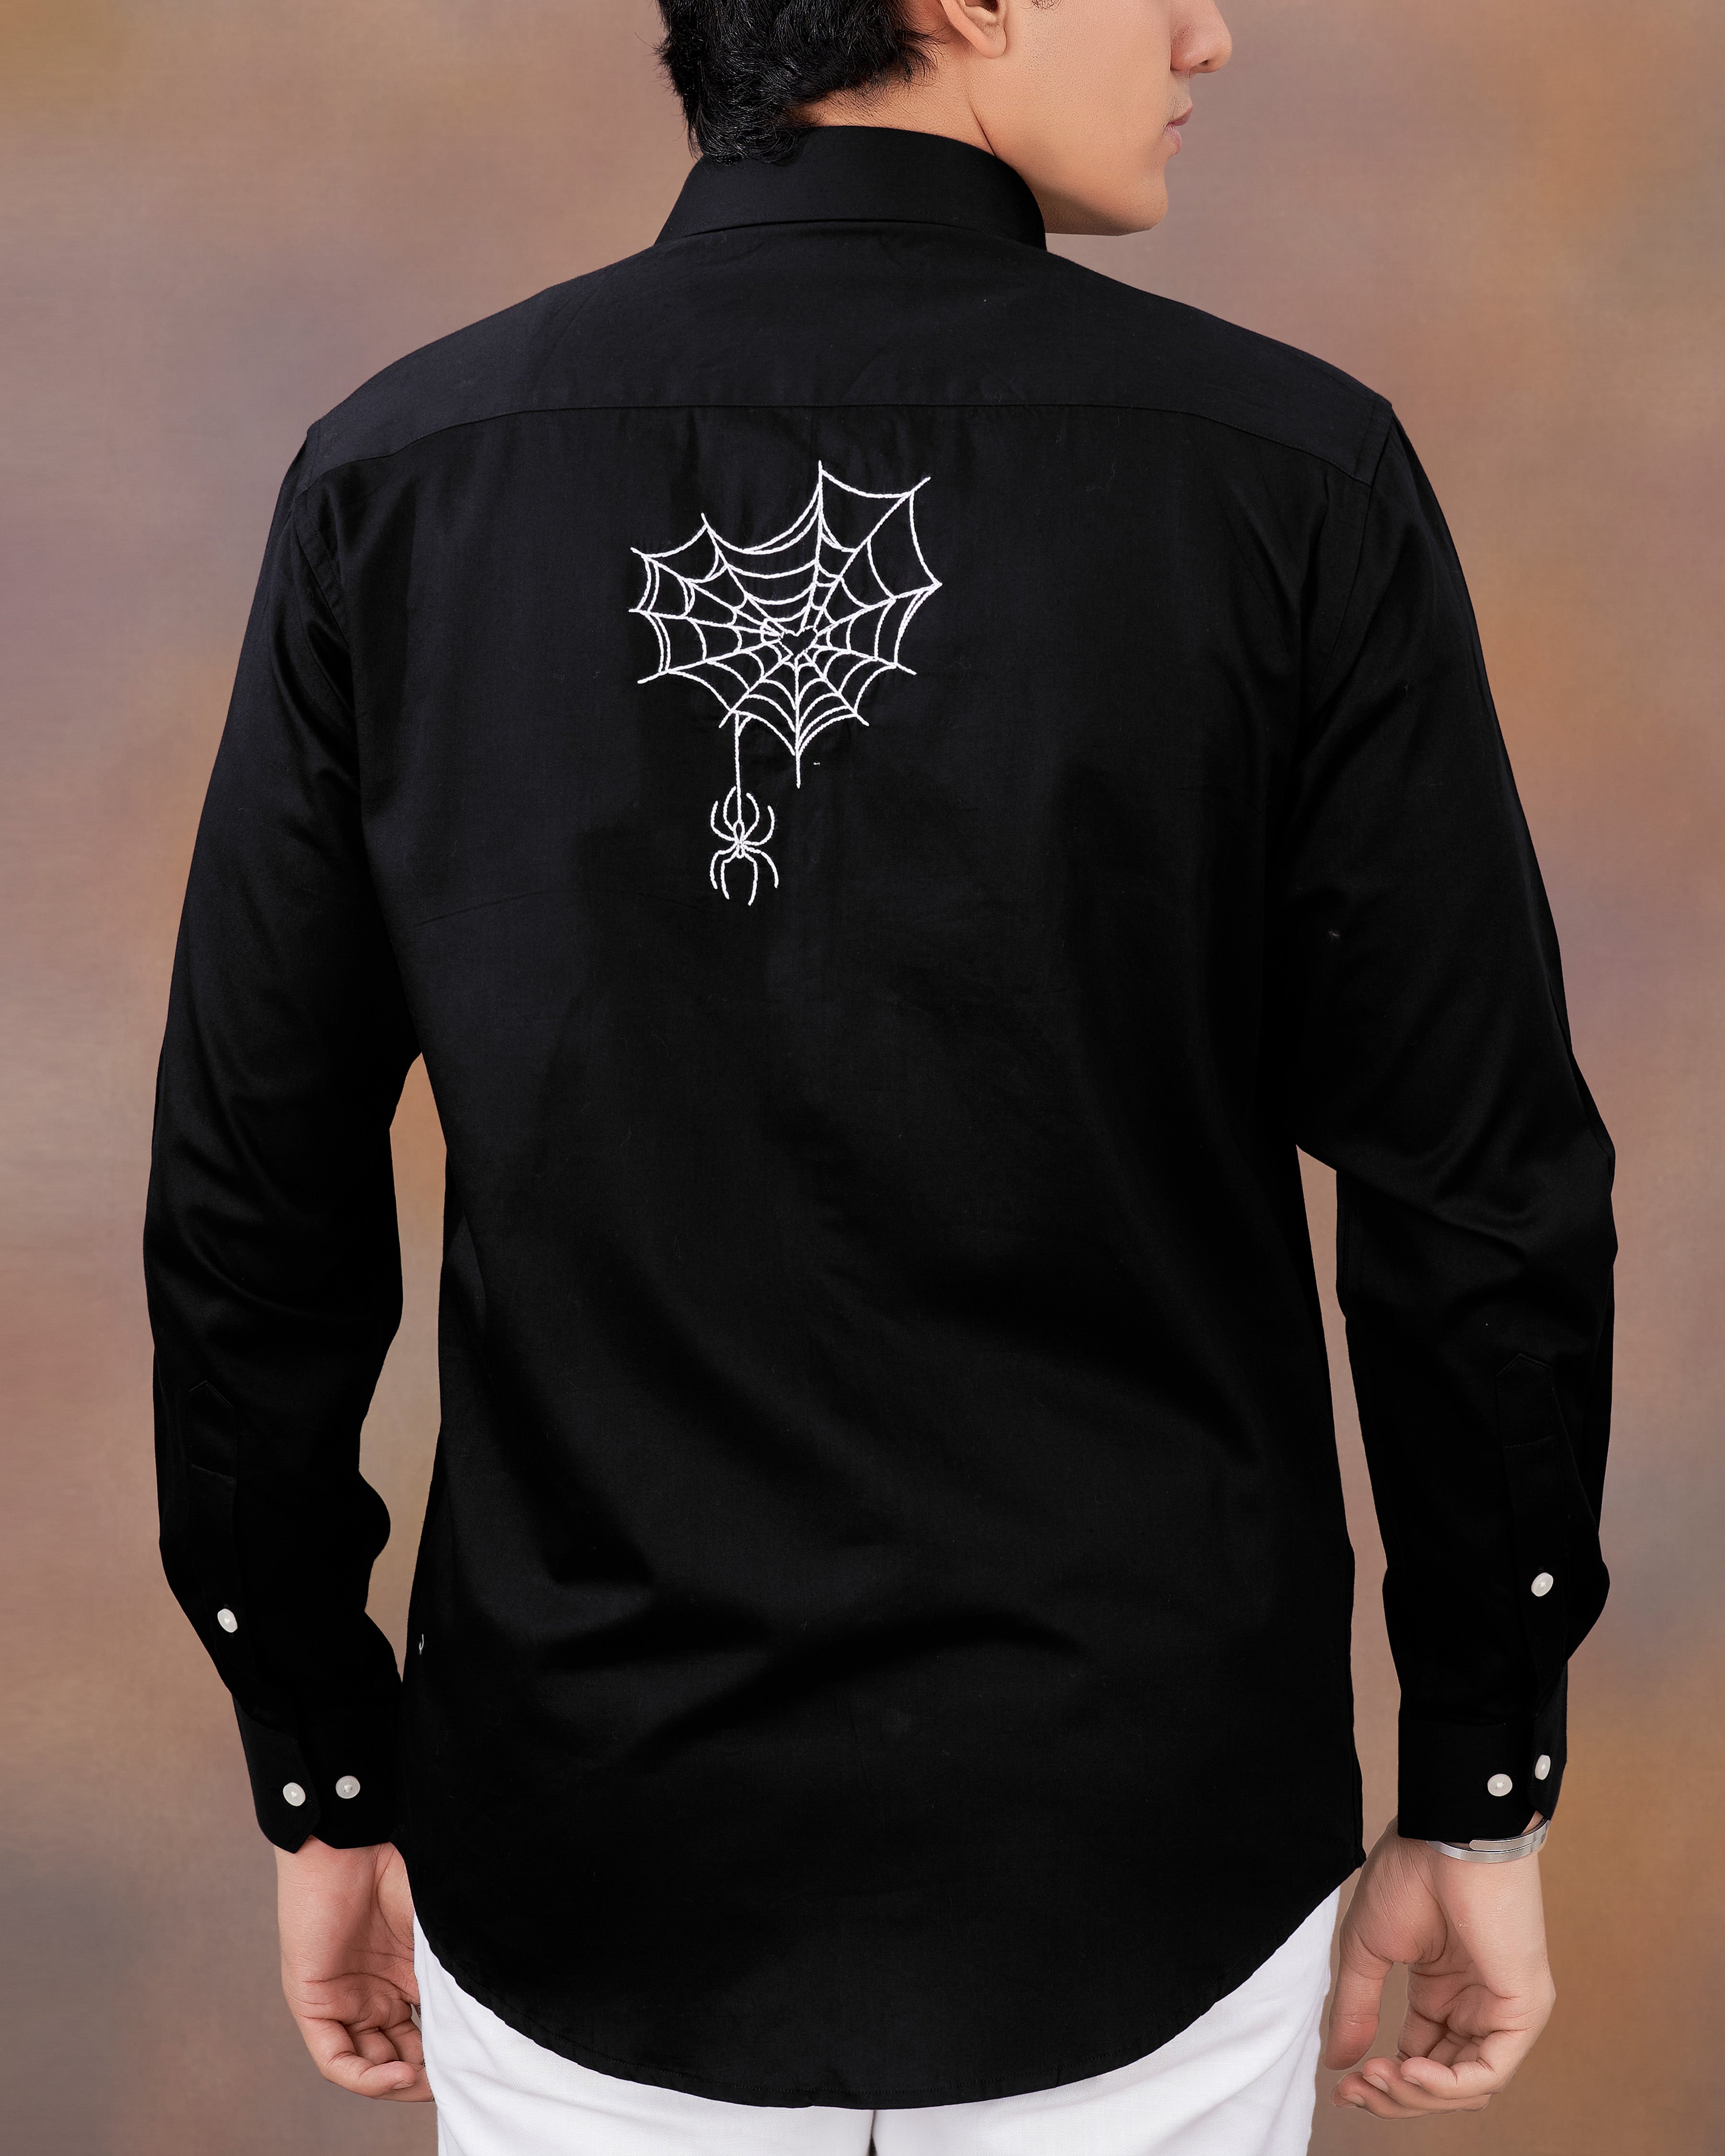 Jade Black Spider with Web Embroidered at the Back Super Soft Premium Cotton Shirt 8939-E016-38, 8939-E016-H-38, 8939-E016-39, 8939-E016-H-39, 8939-E016-40, 8939-E016-H-40, 8939-E016-42, 8939-E016-H-42, 8939-E016-44, 8939-E016-H-44, 8939-E016-46, 8939-E016-H-46, 8939-E016-48, 8939-E016-H-48, 8939-E016-50, 8939-E016-H-50, 8939-E016-52, 8939-E016-H-52